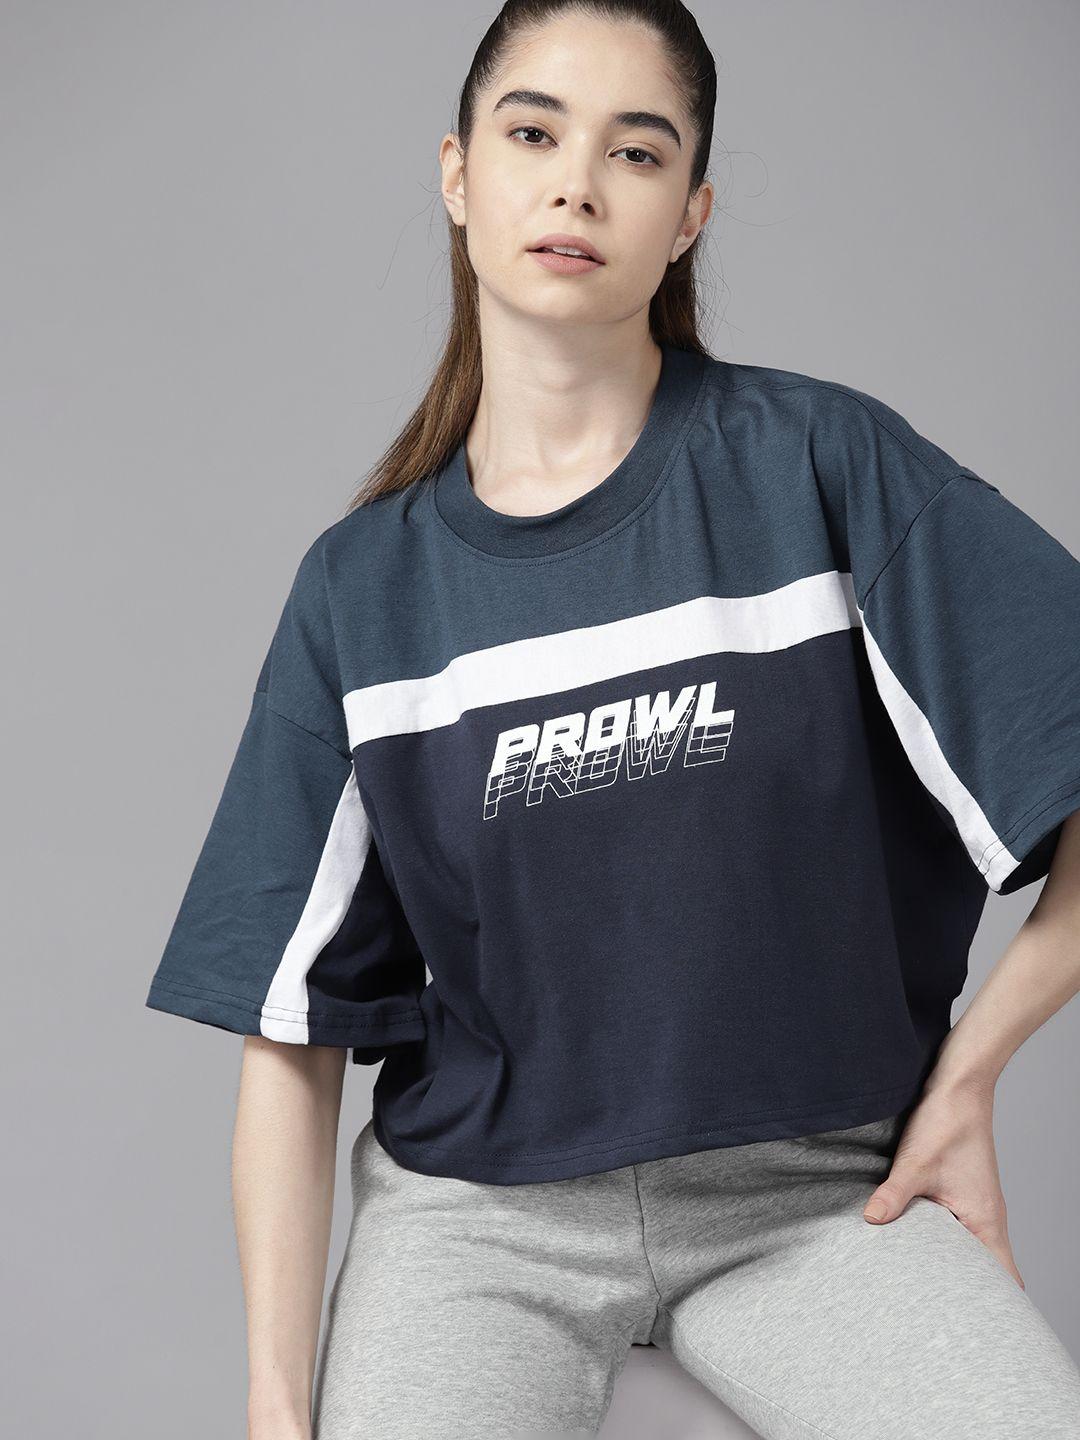 prowl by tiger shroff women brand logo printed t-shirt